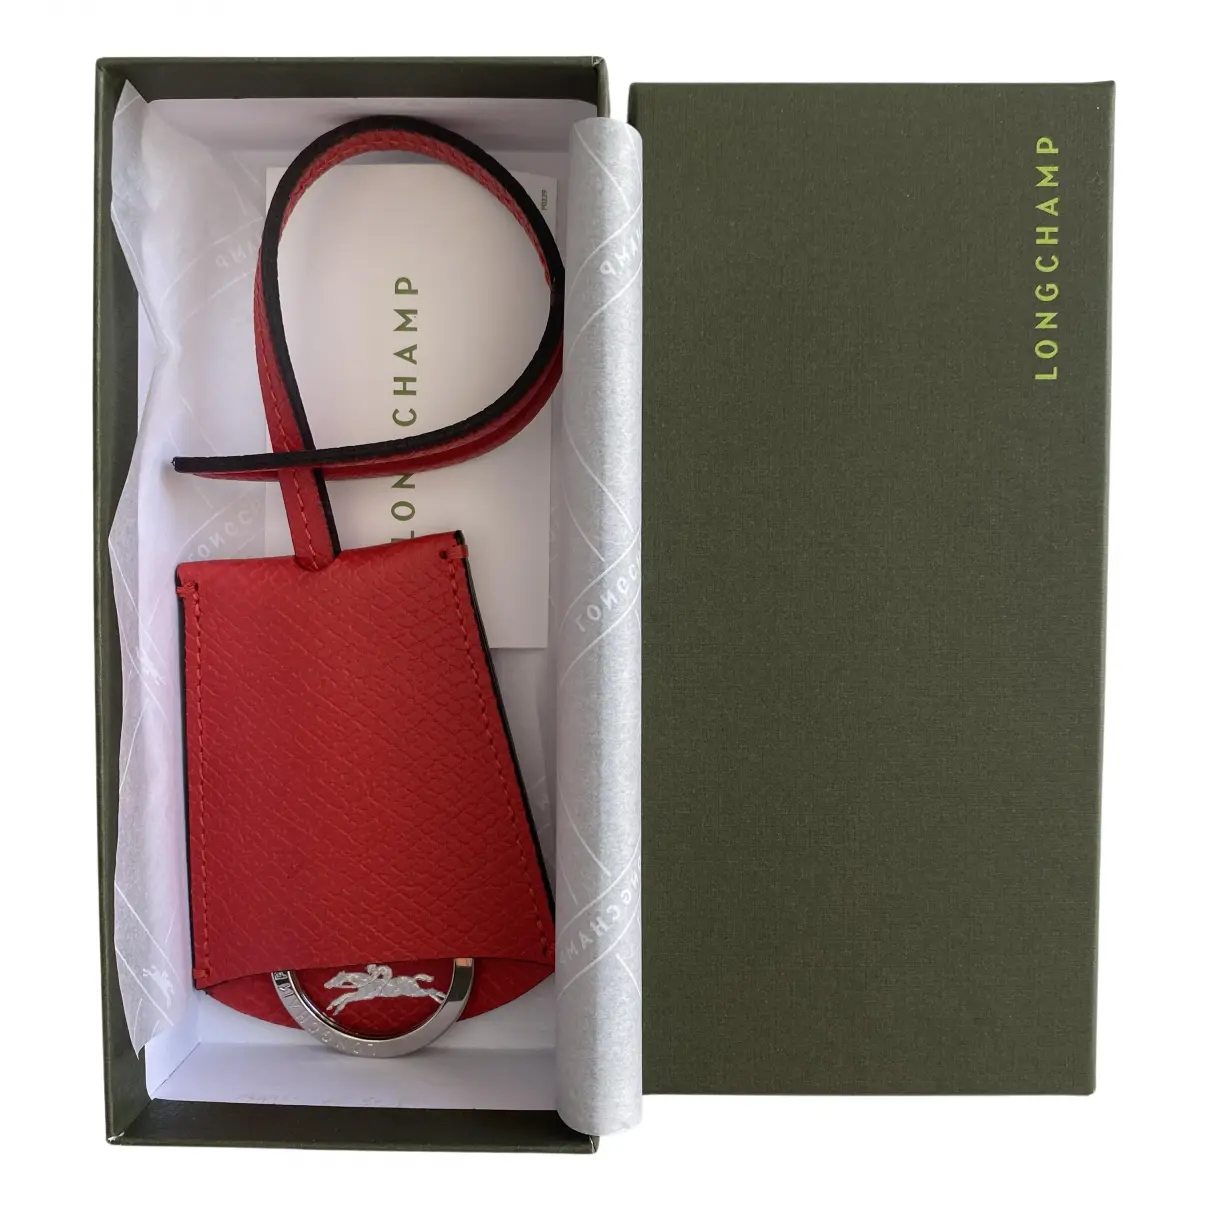 Buy Longchamp Leather purse online